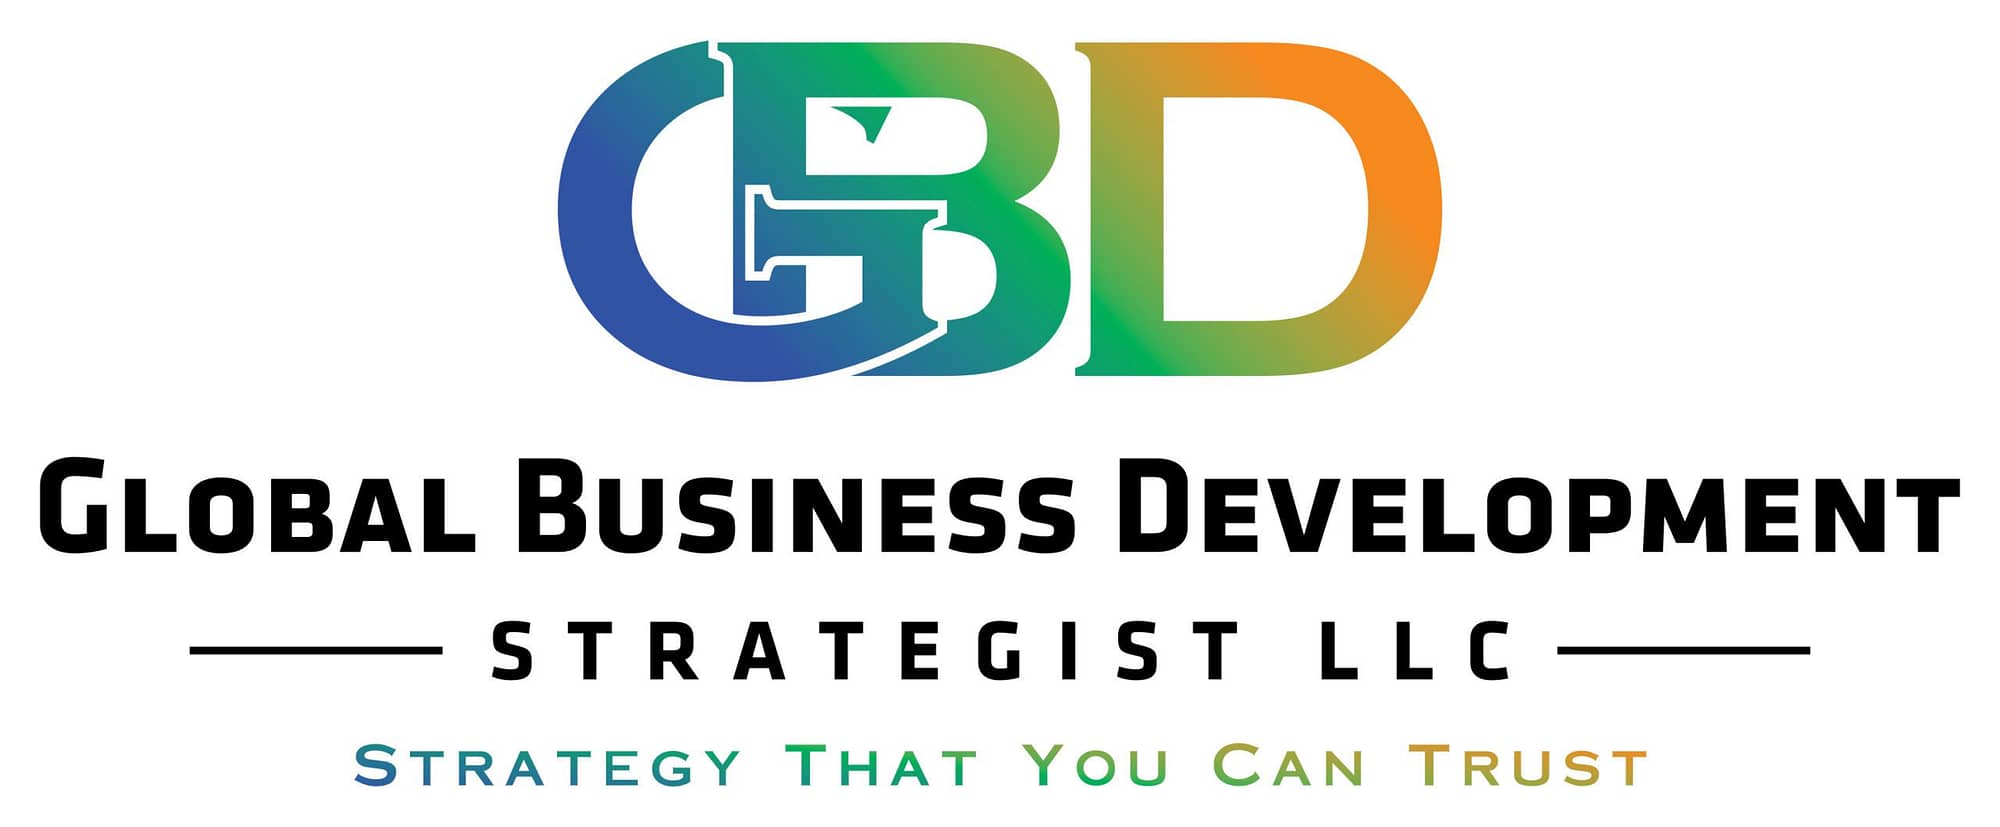 Global Business Development Strategist